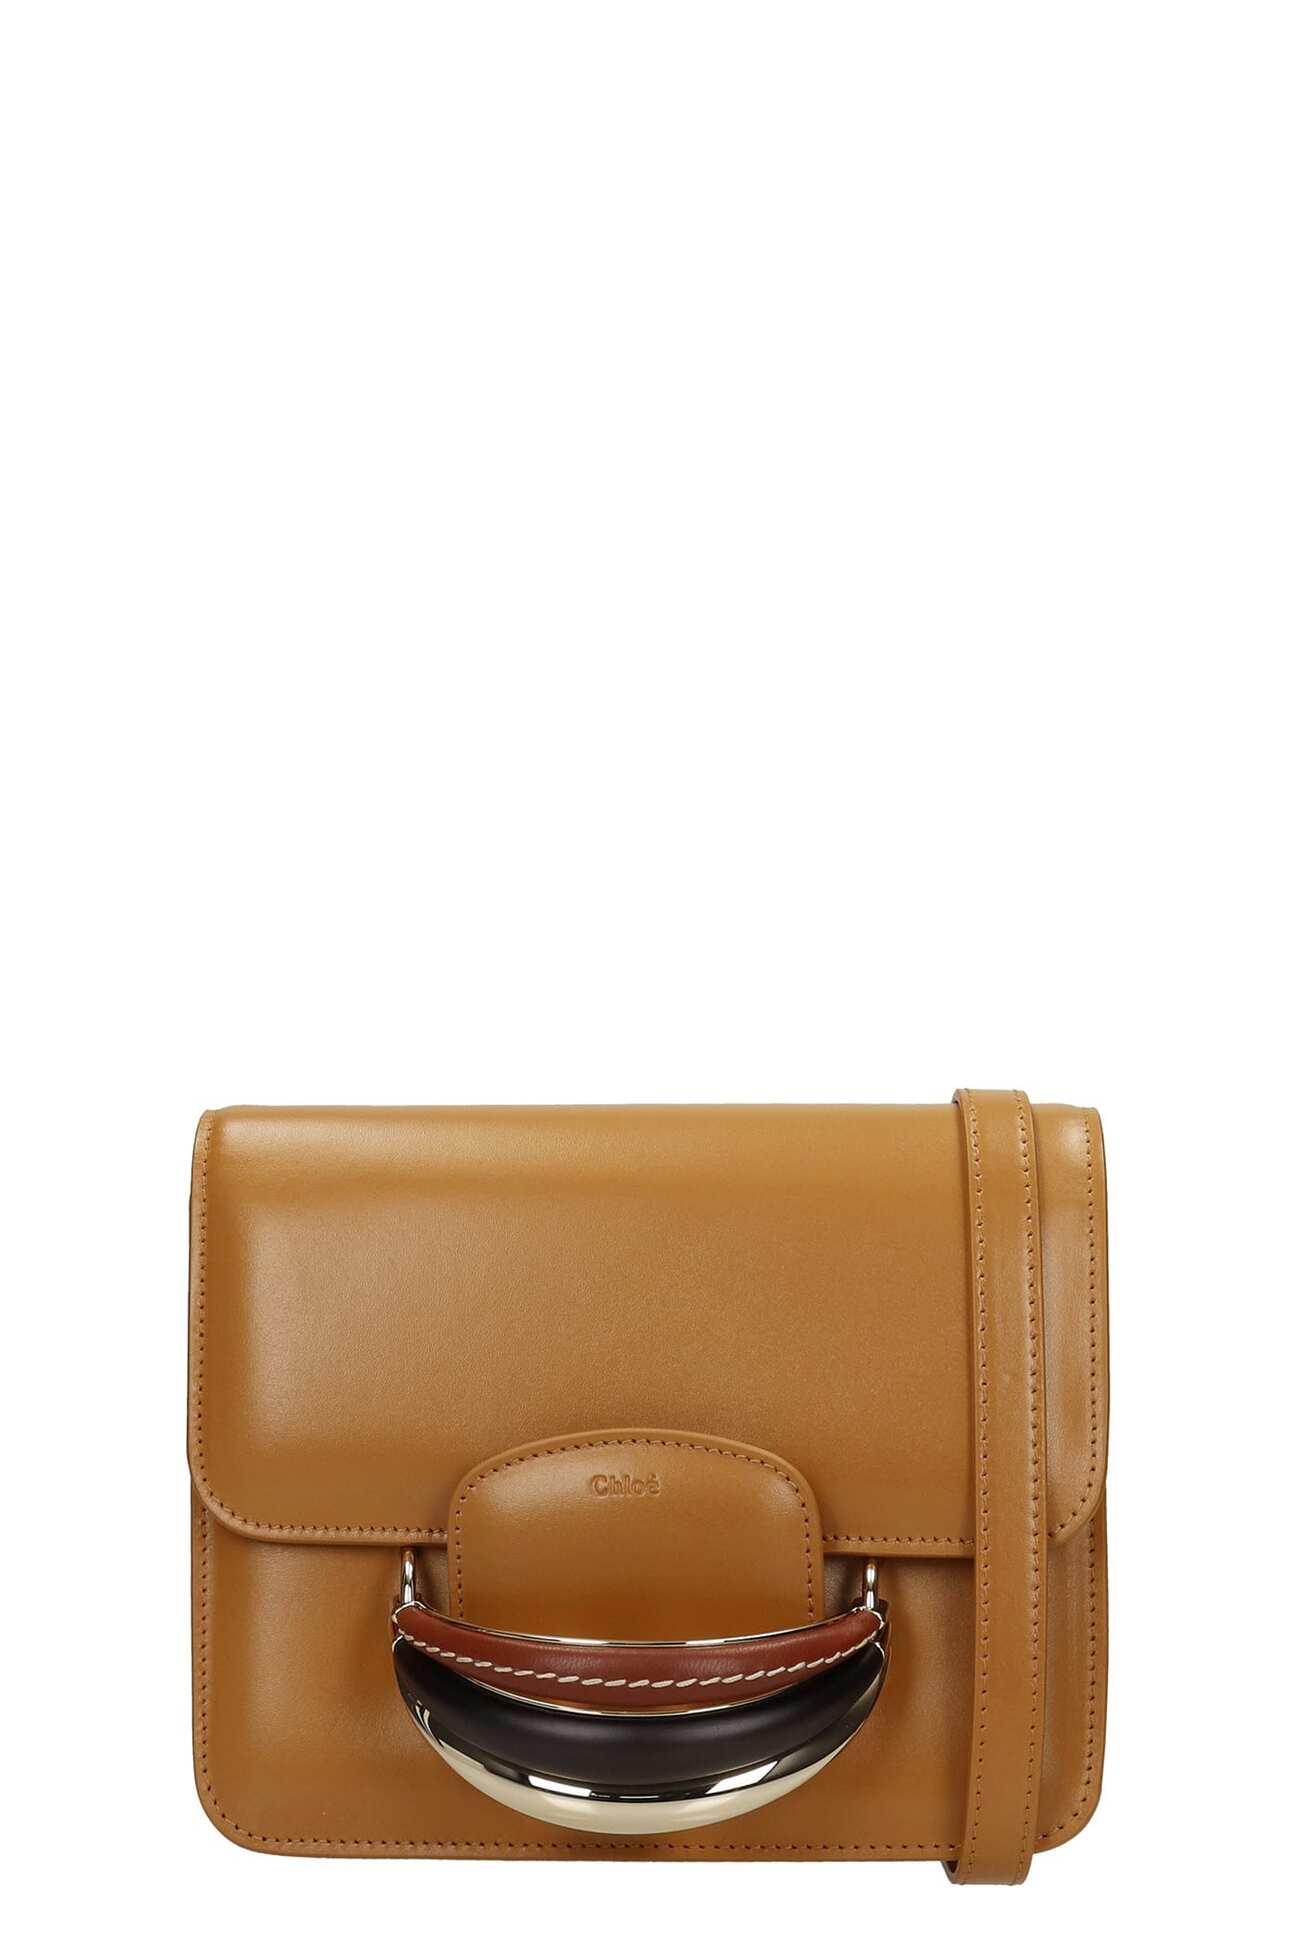 Chloé Chloé Kattie Shoulder Bag In Brown Leather